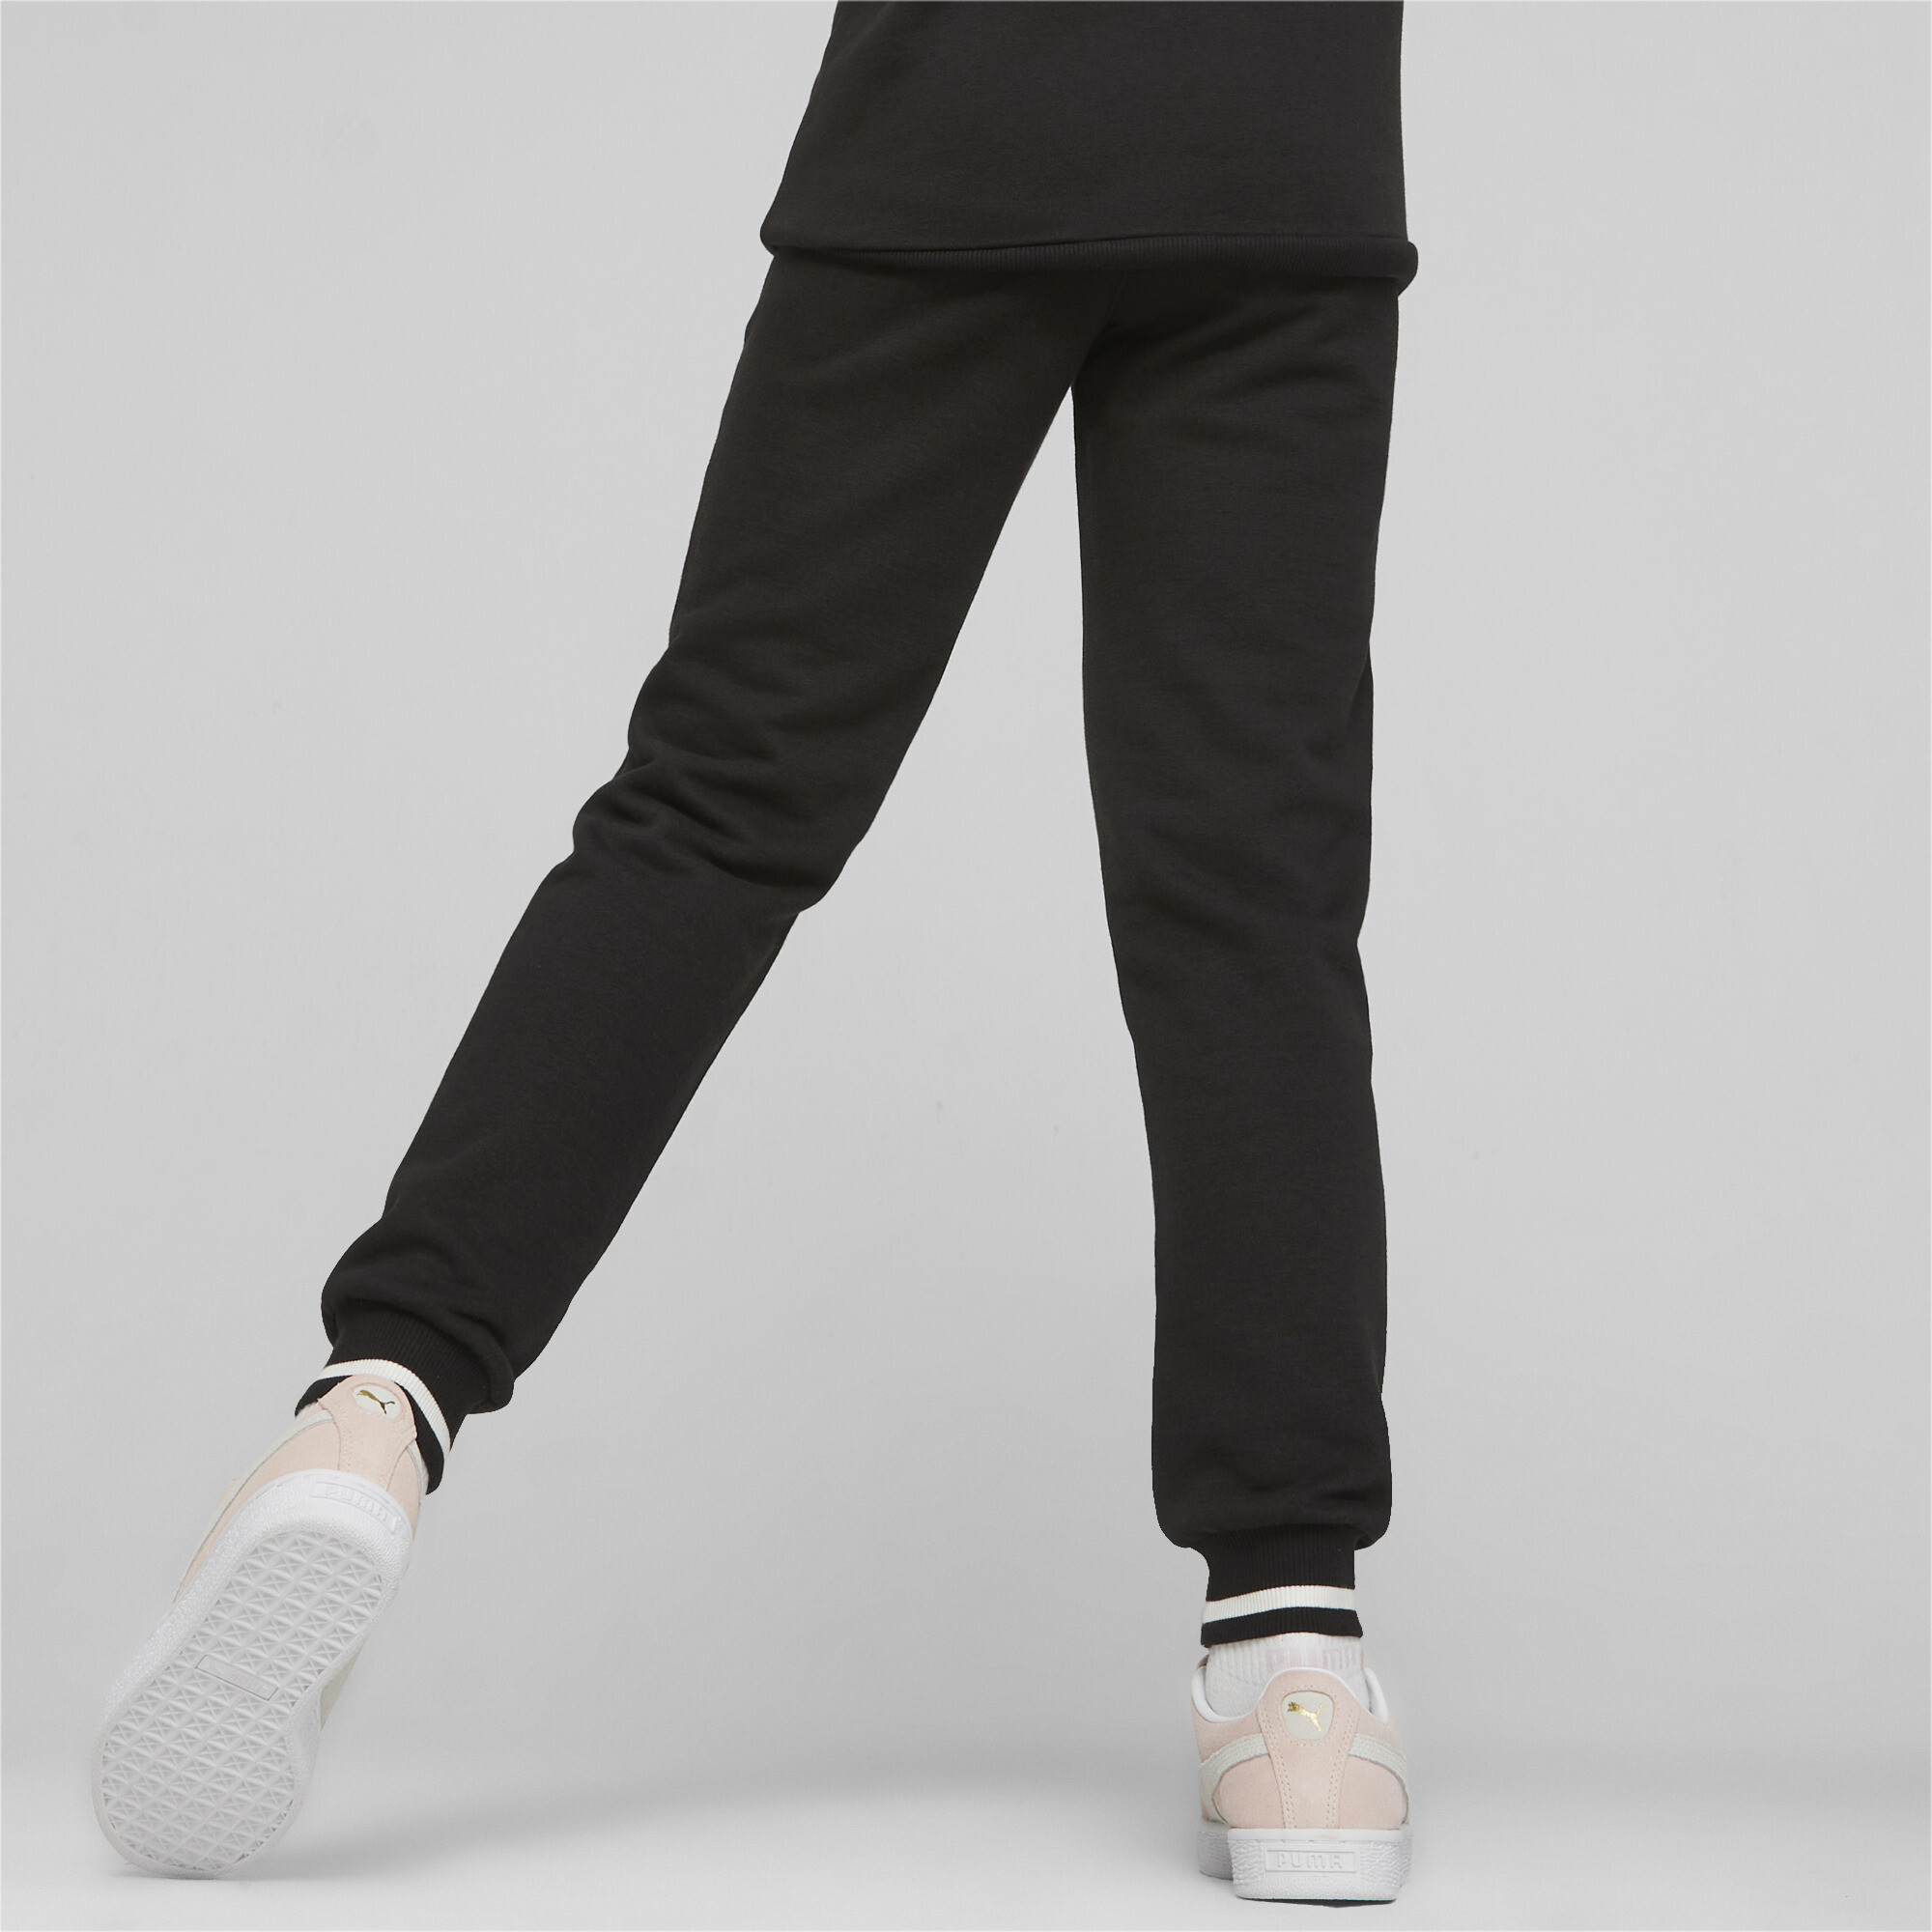 Women's Puma SQUAD Youth Sweatpants, Black, Size 9-10Y, Clothing